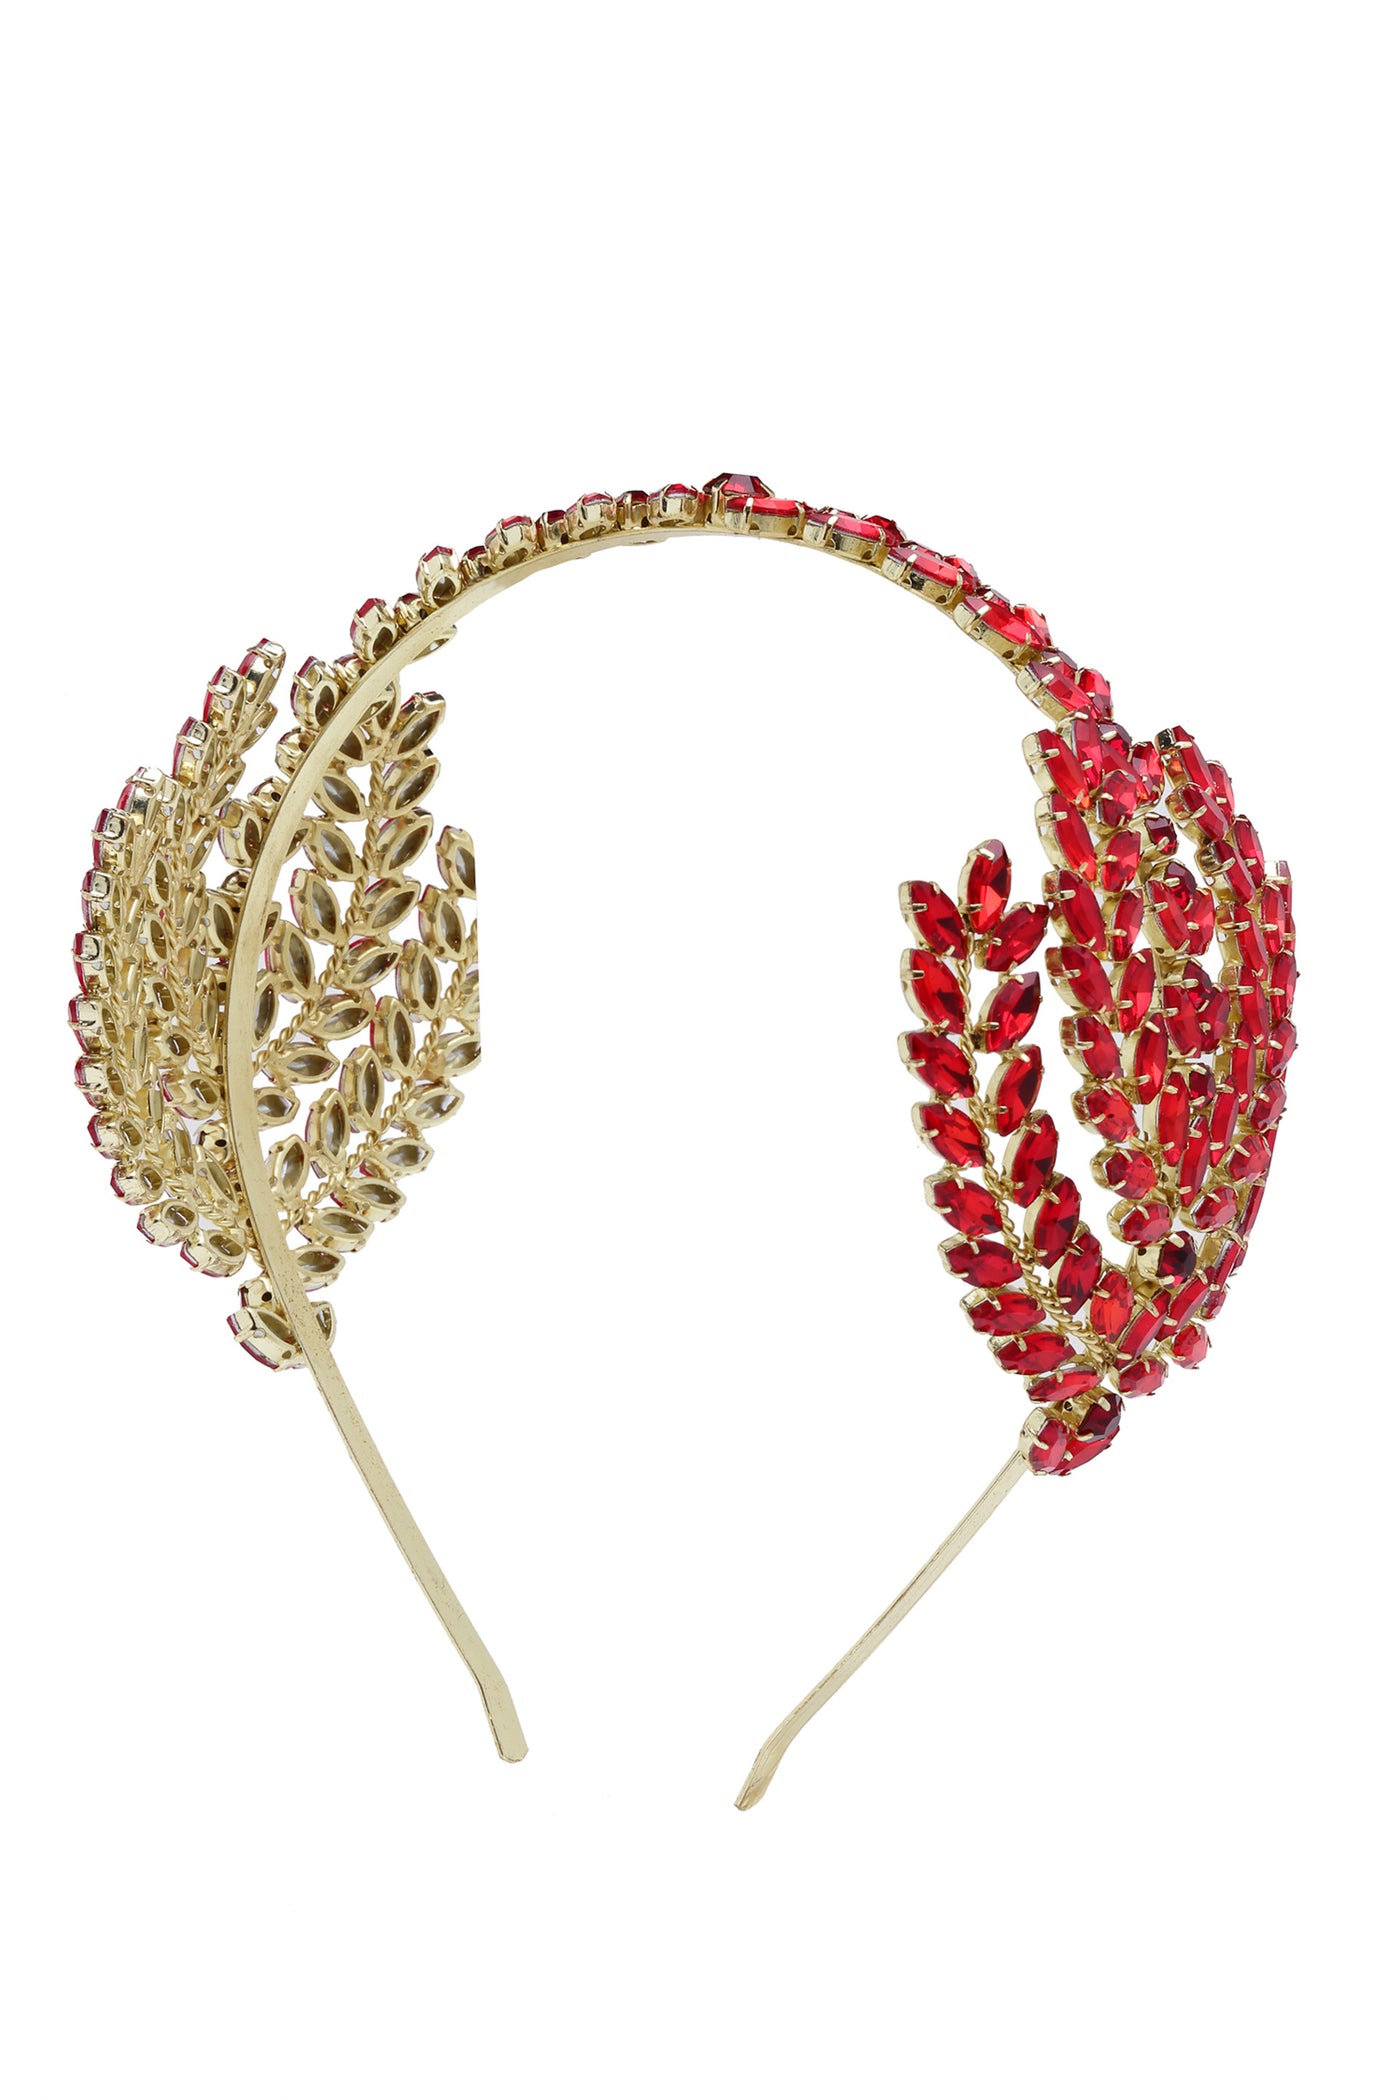 Bijoux by priya chandna Rose Hair Band red and rose gold fashion accessories indian designer wear online shopping melange singapore